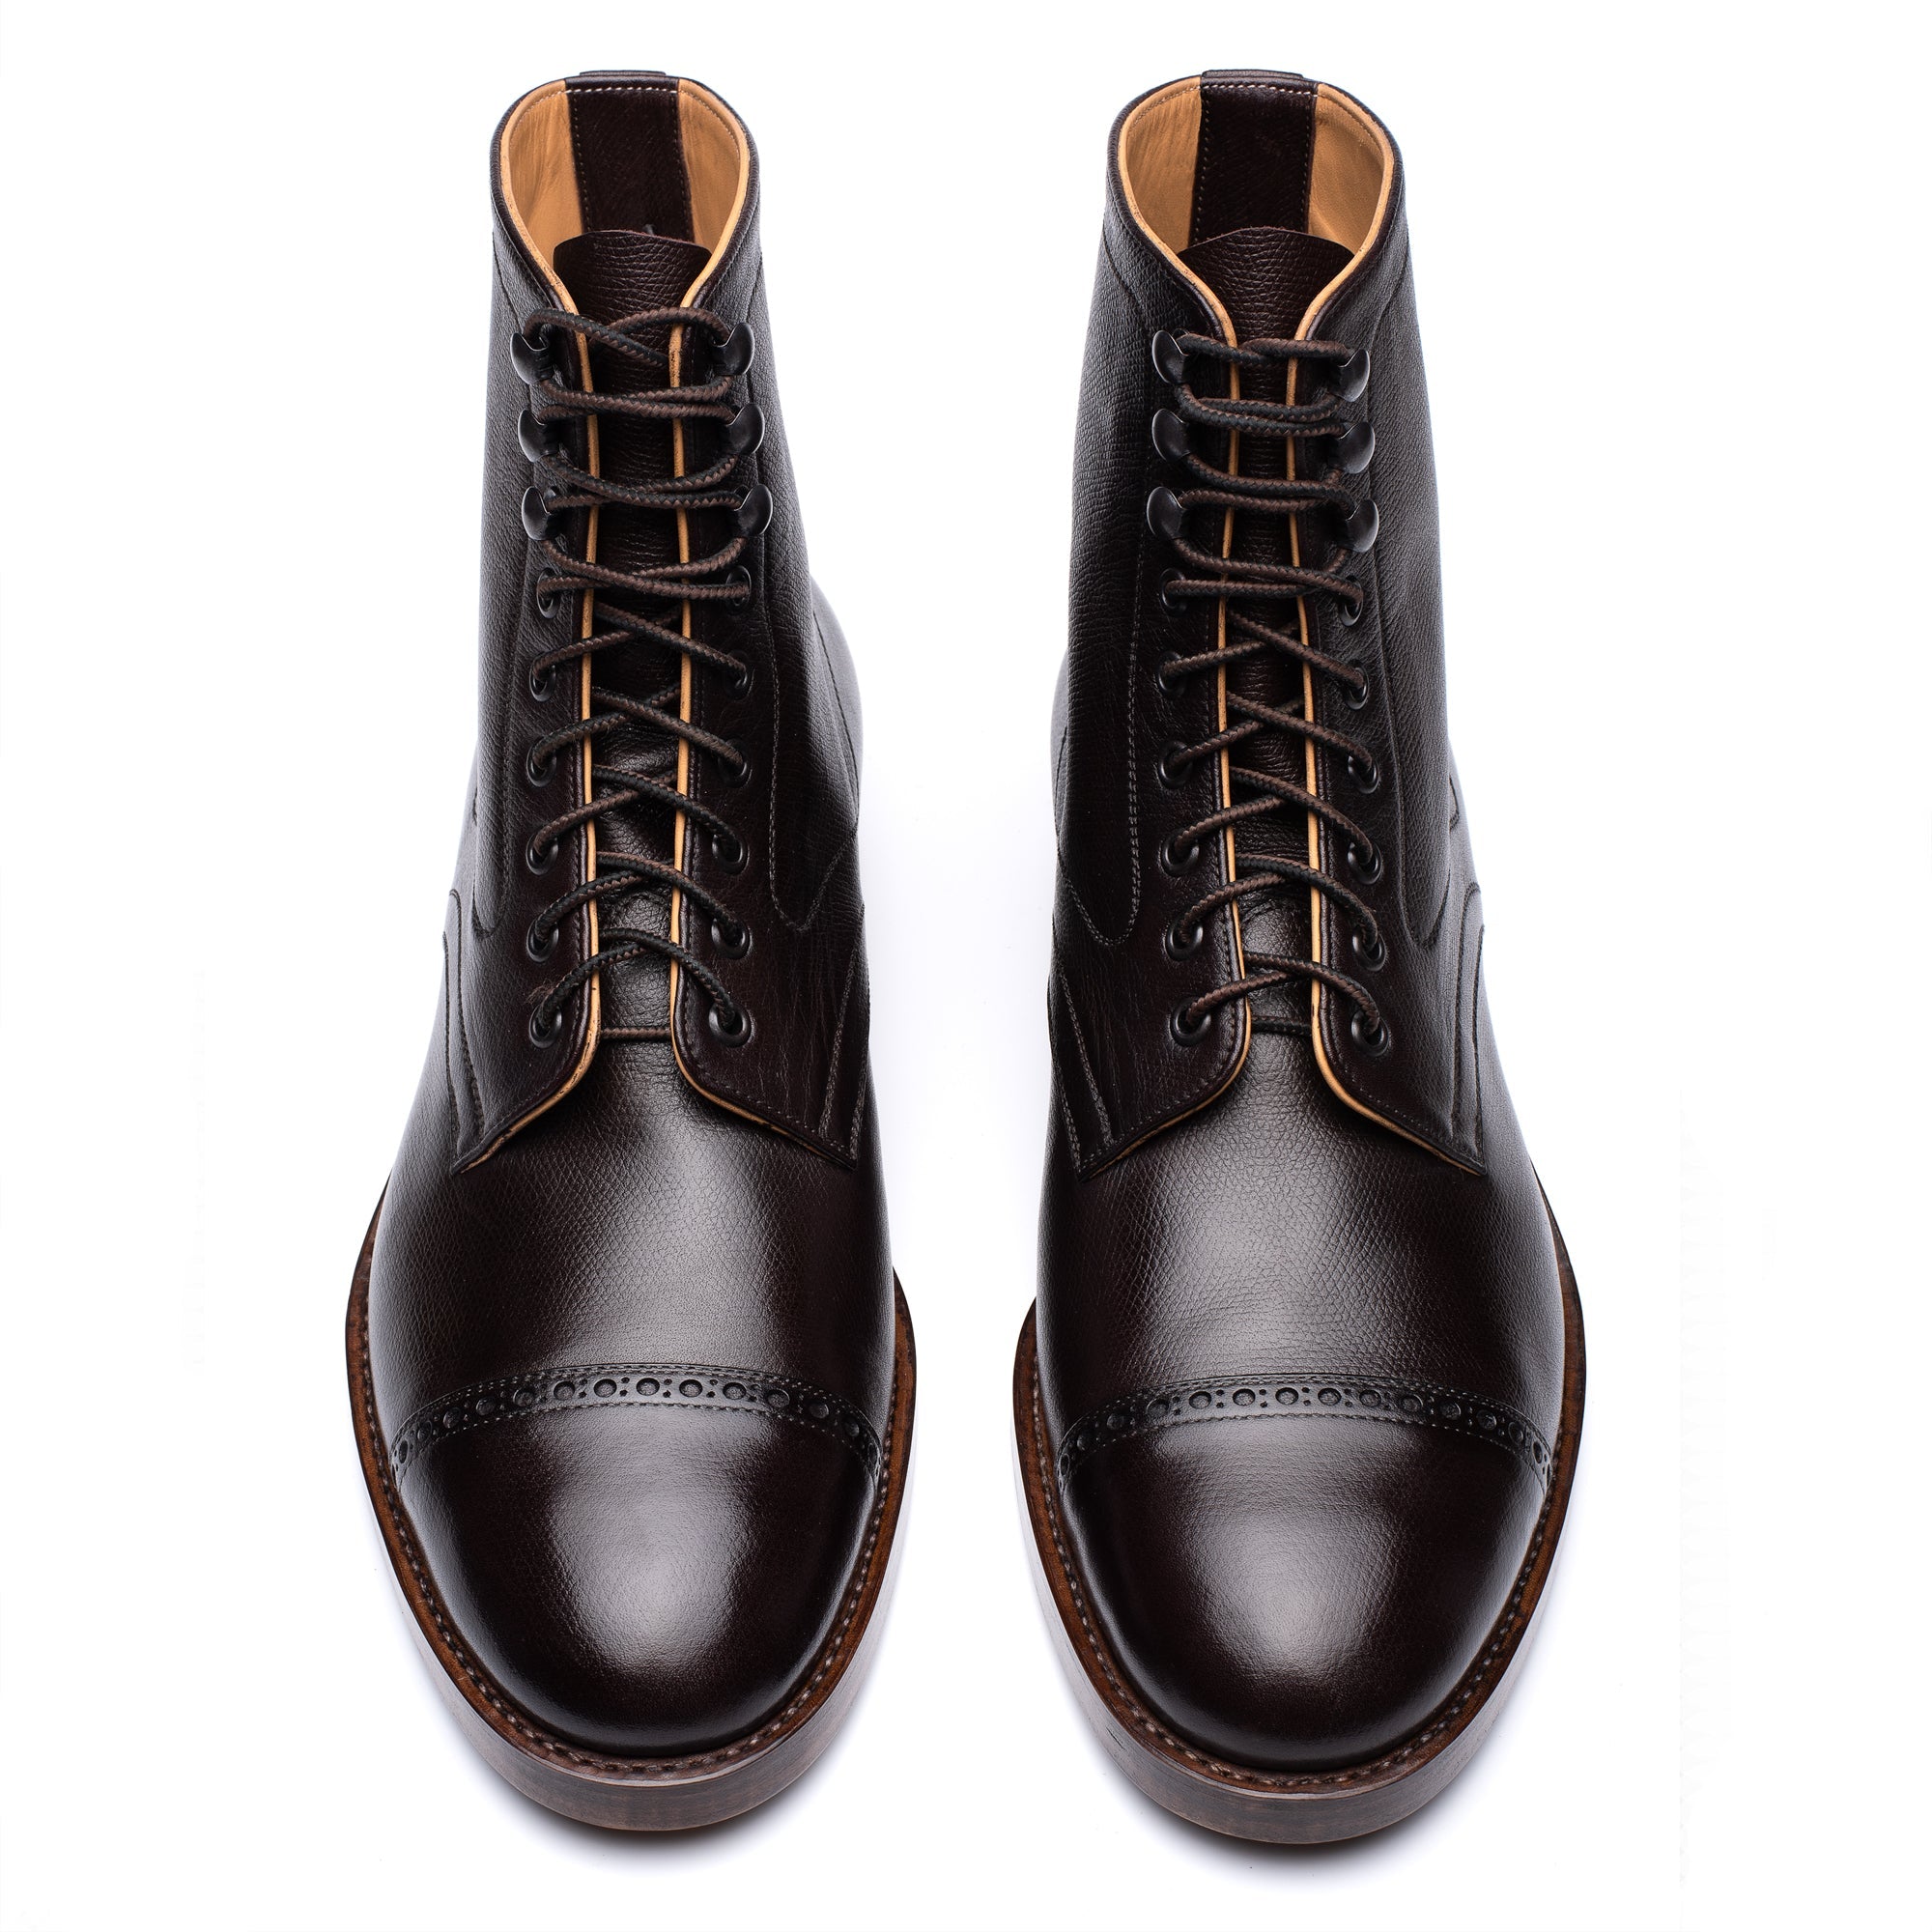 PASSUS SHOES "Patrick" Brown Grain Army Derby Leather Boots US 10.5 NEW EU 43.5 PASSUS SHOES